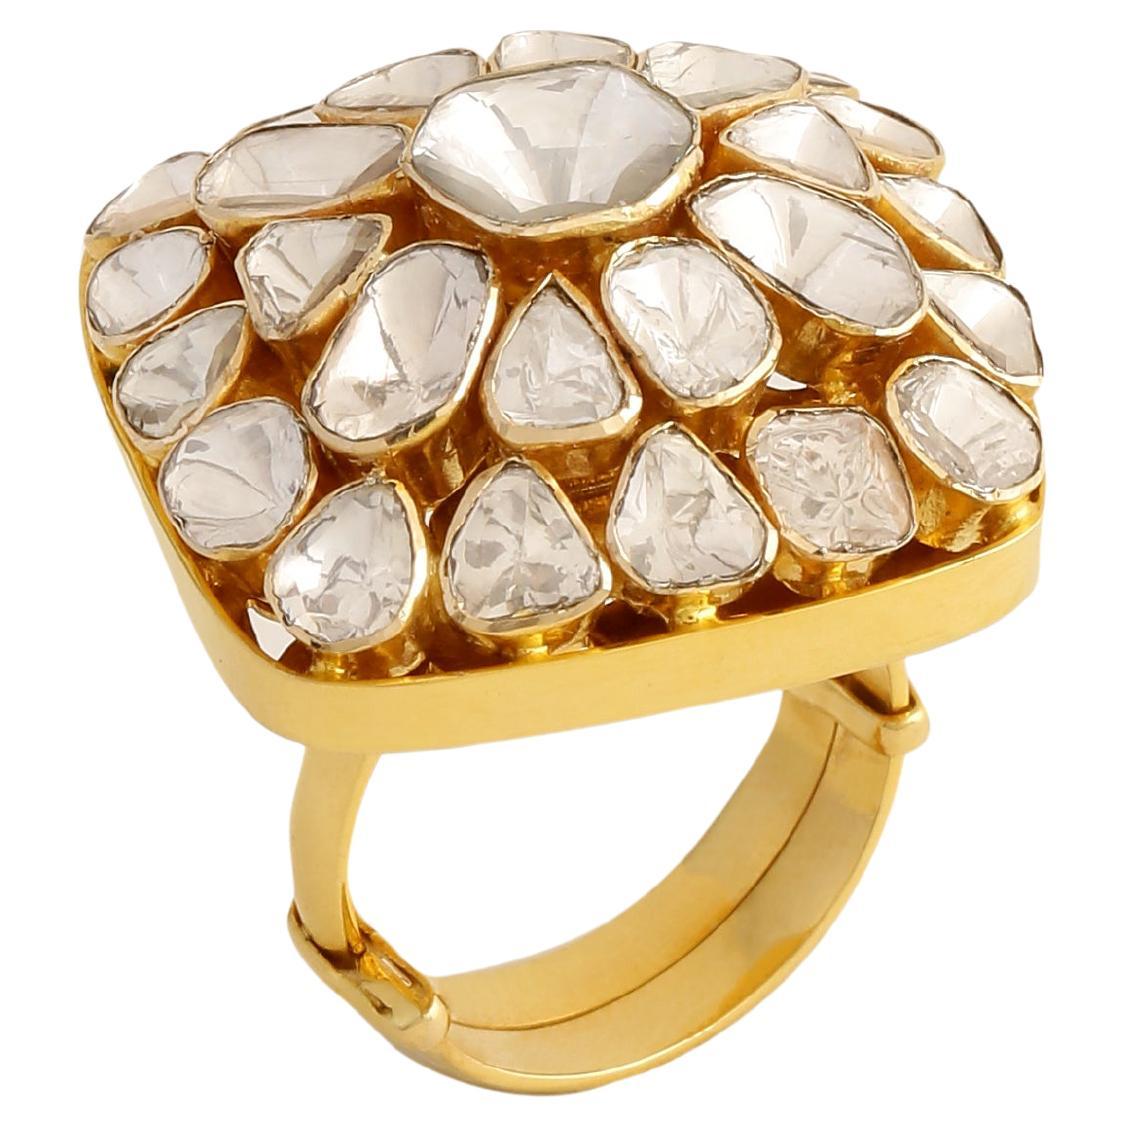 Diamond Statement Ring Cum Pendant Handcrafted in 14k Gold